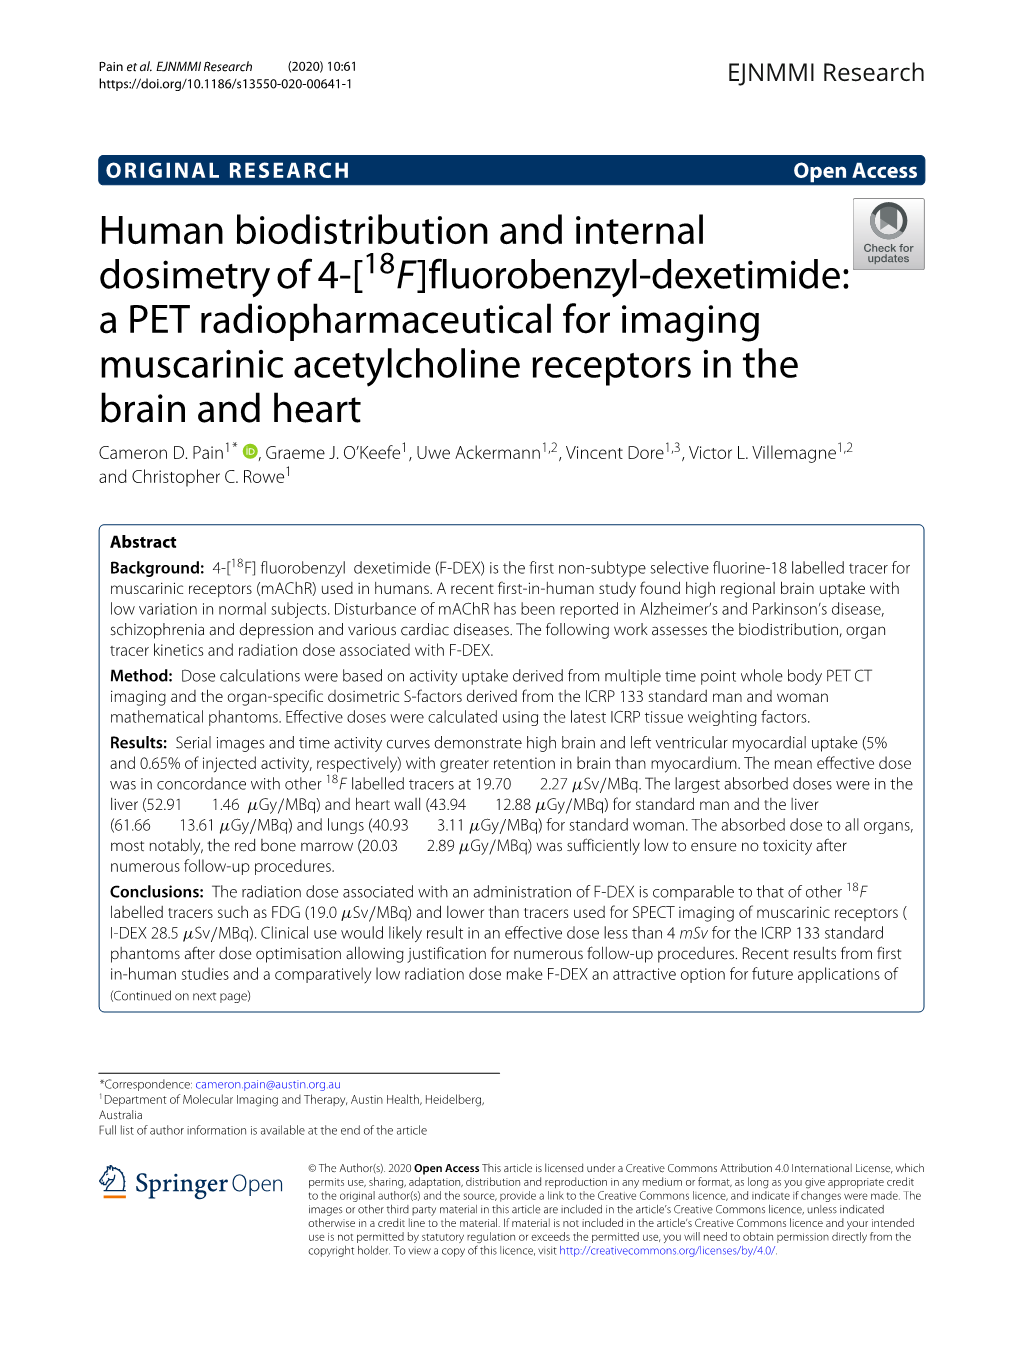 Human Biodistribution and Internal Dosimetry of 4-[ 18F]Fluorobenzyl